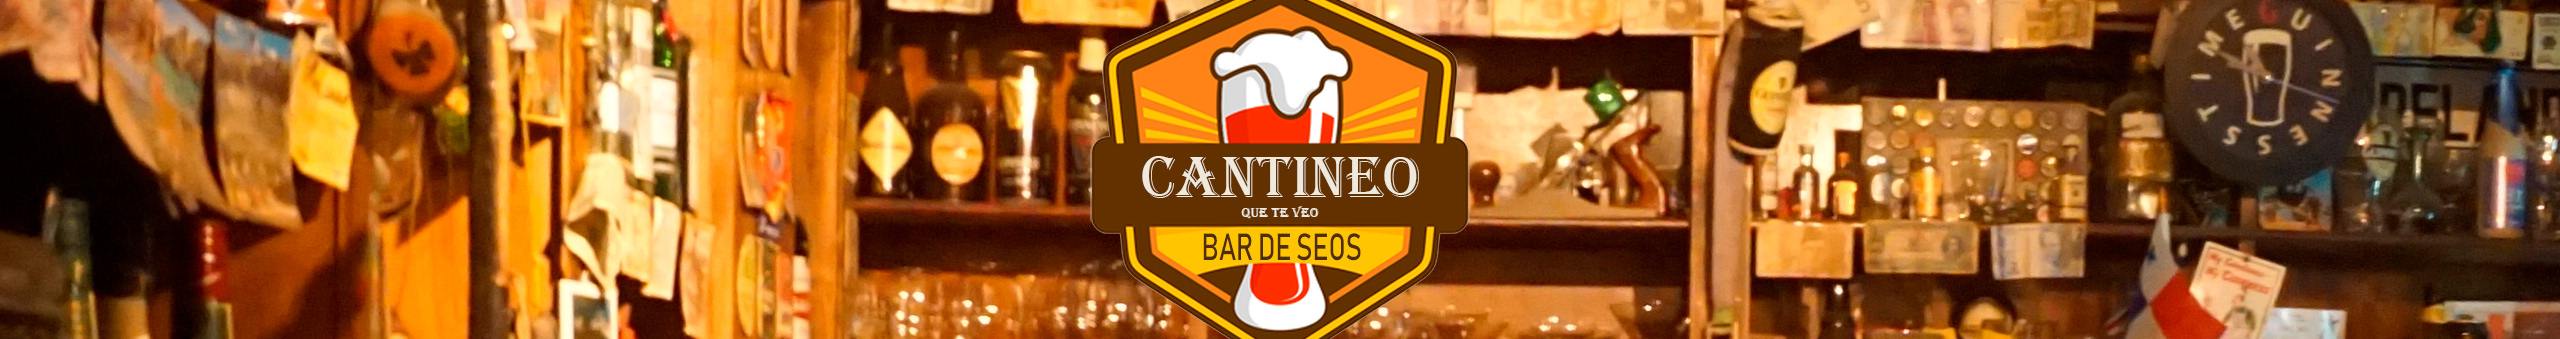 Cantineoqueteveo Madrid profil başlığı